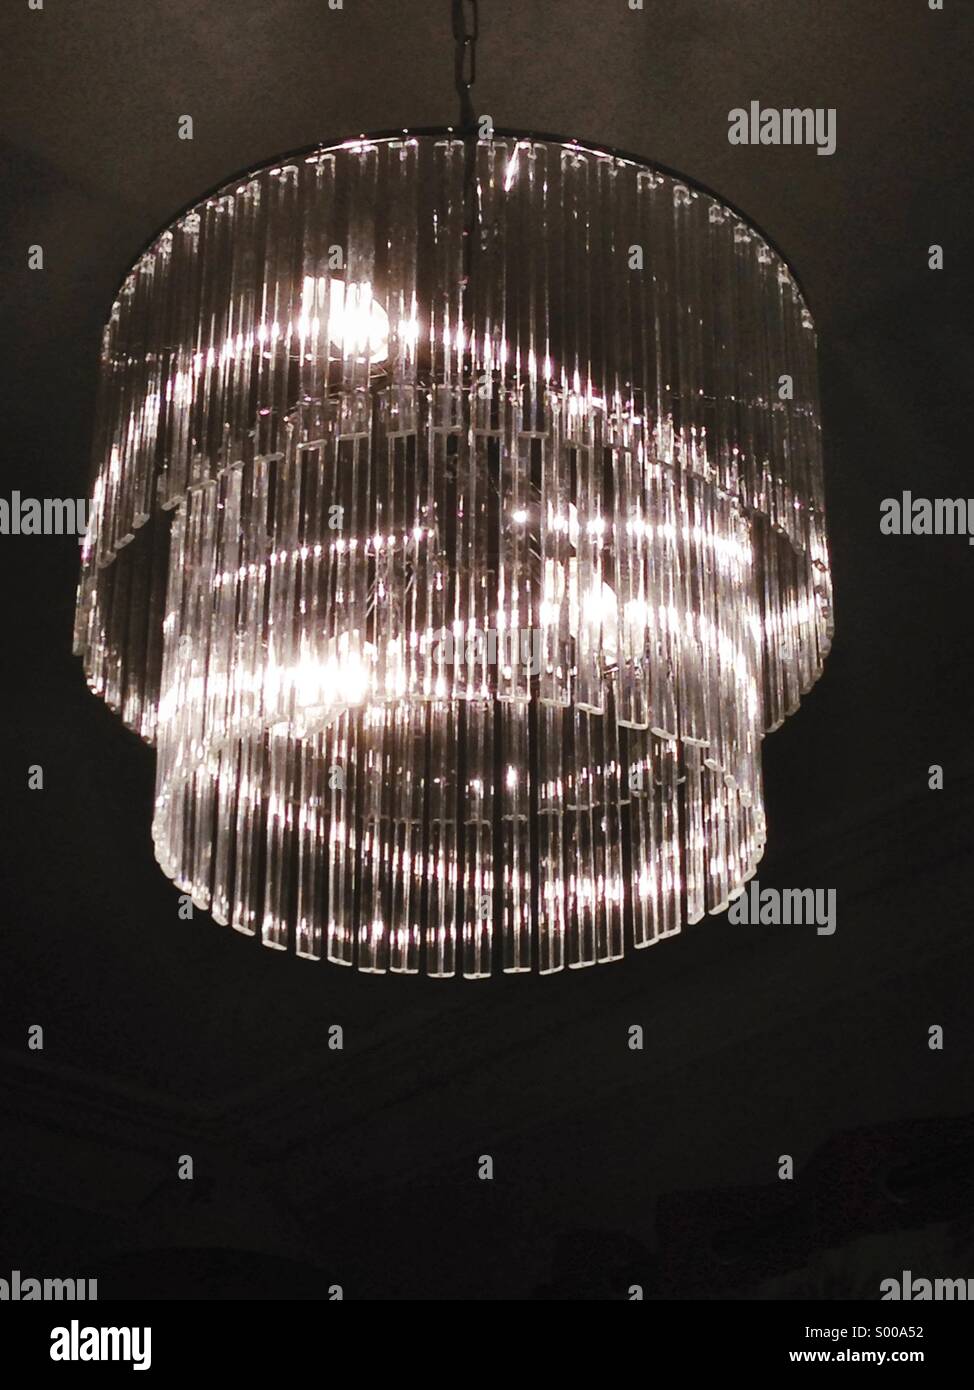 Light shining through a chandelier Stock Photo